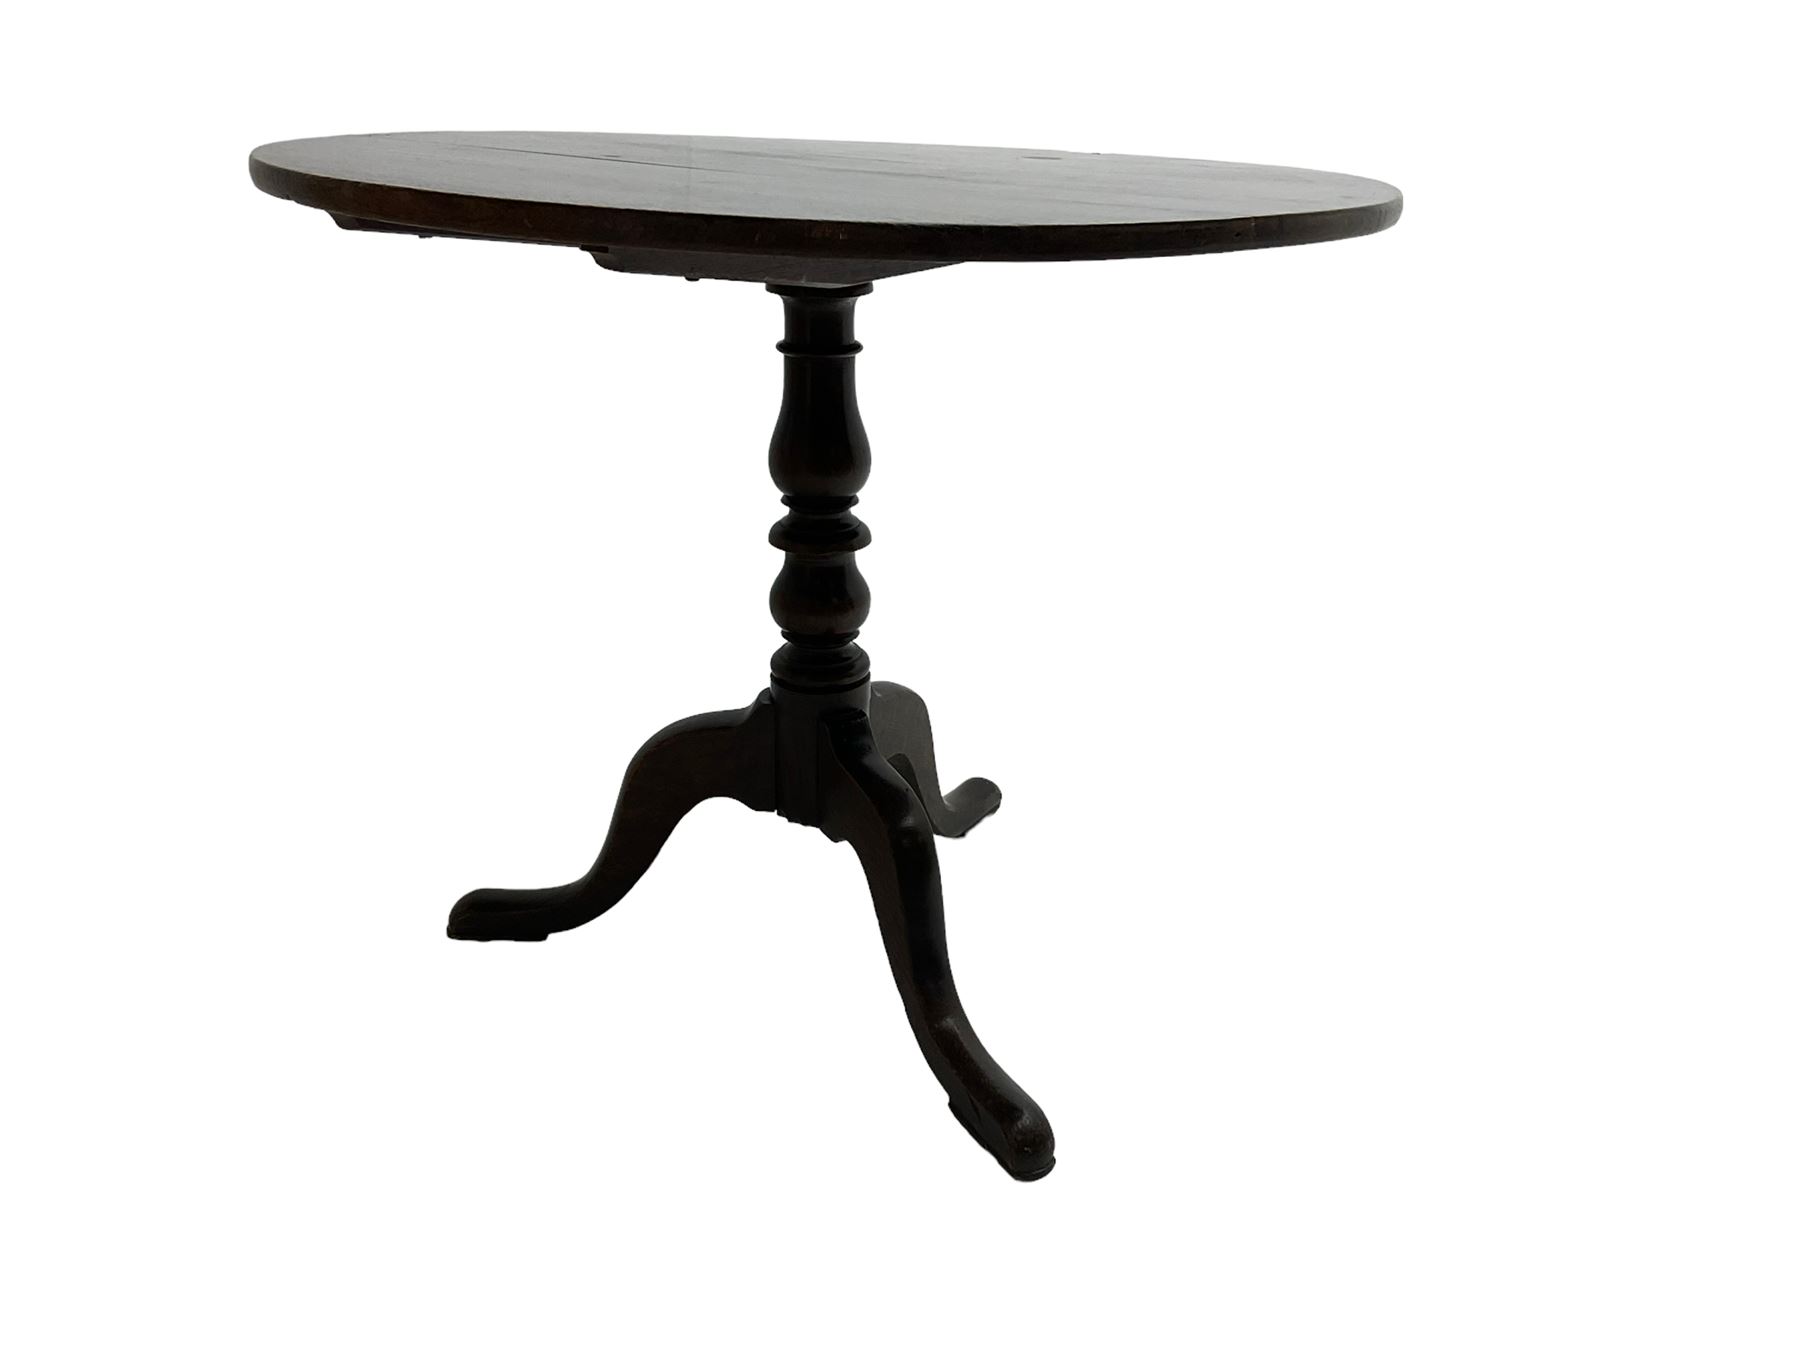 Late 19th century oak tilt-top tripod table